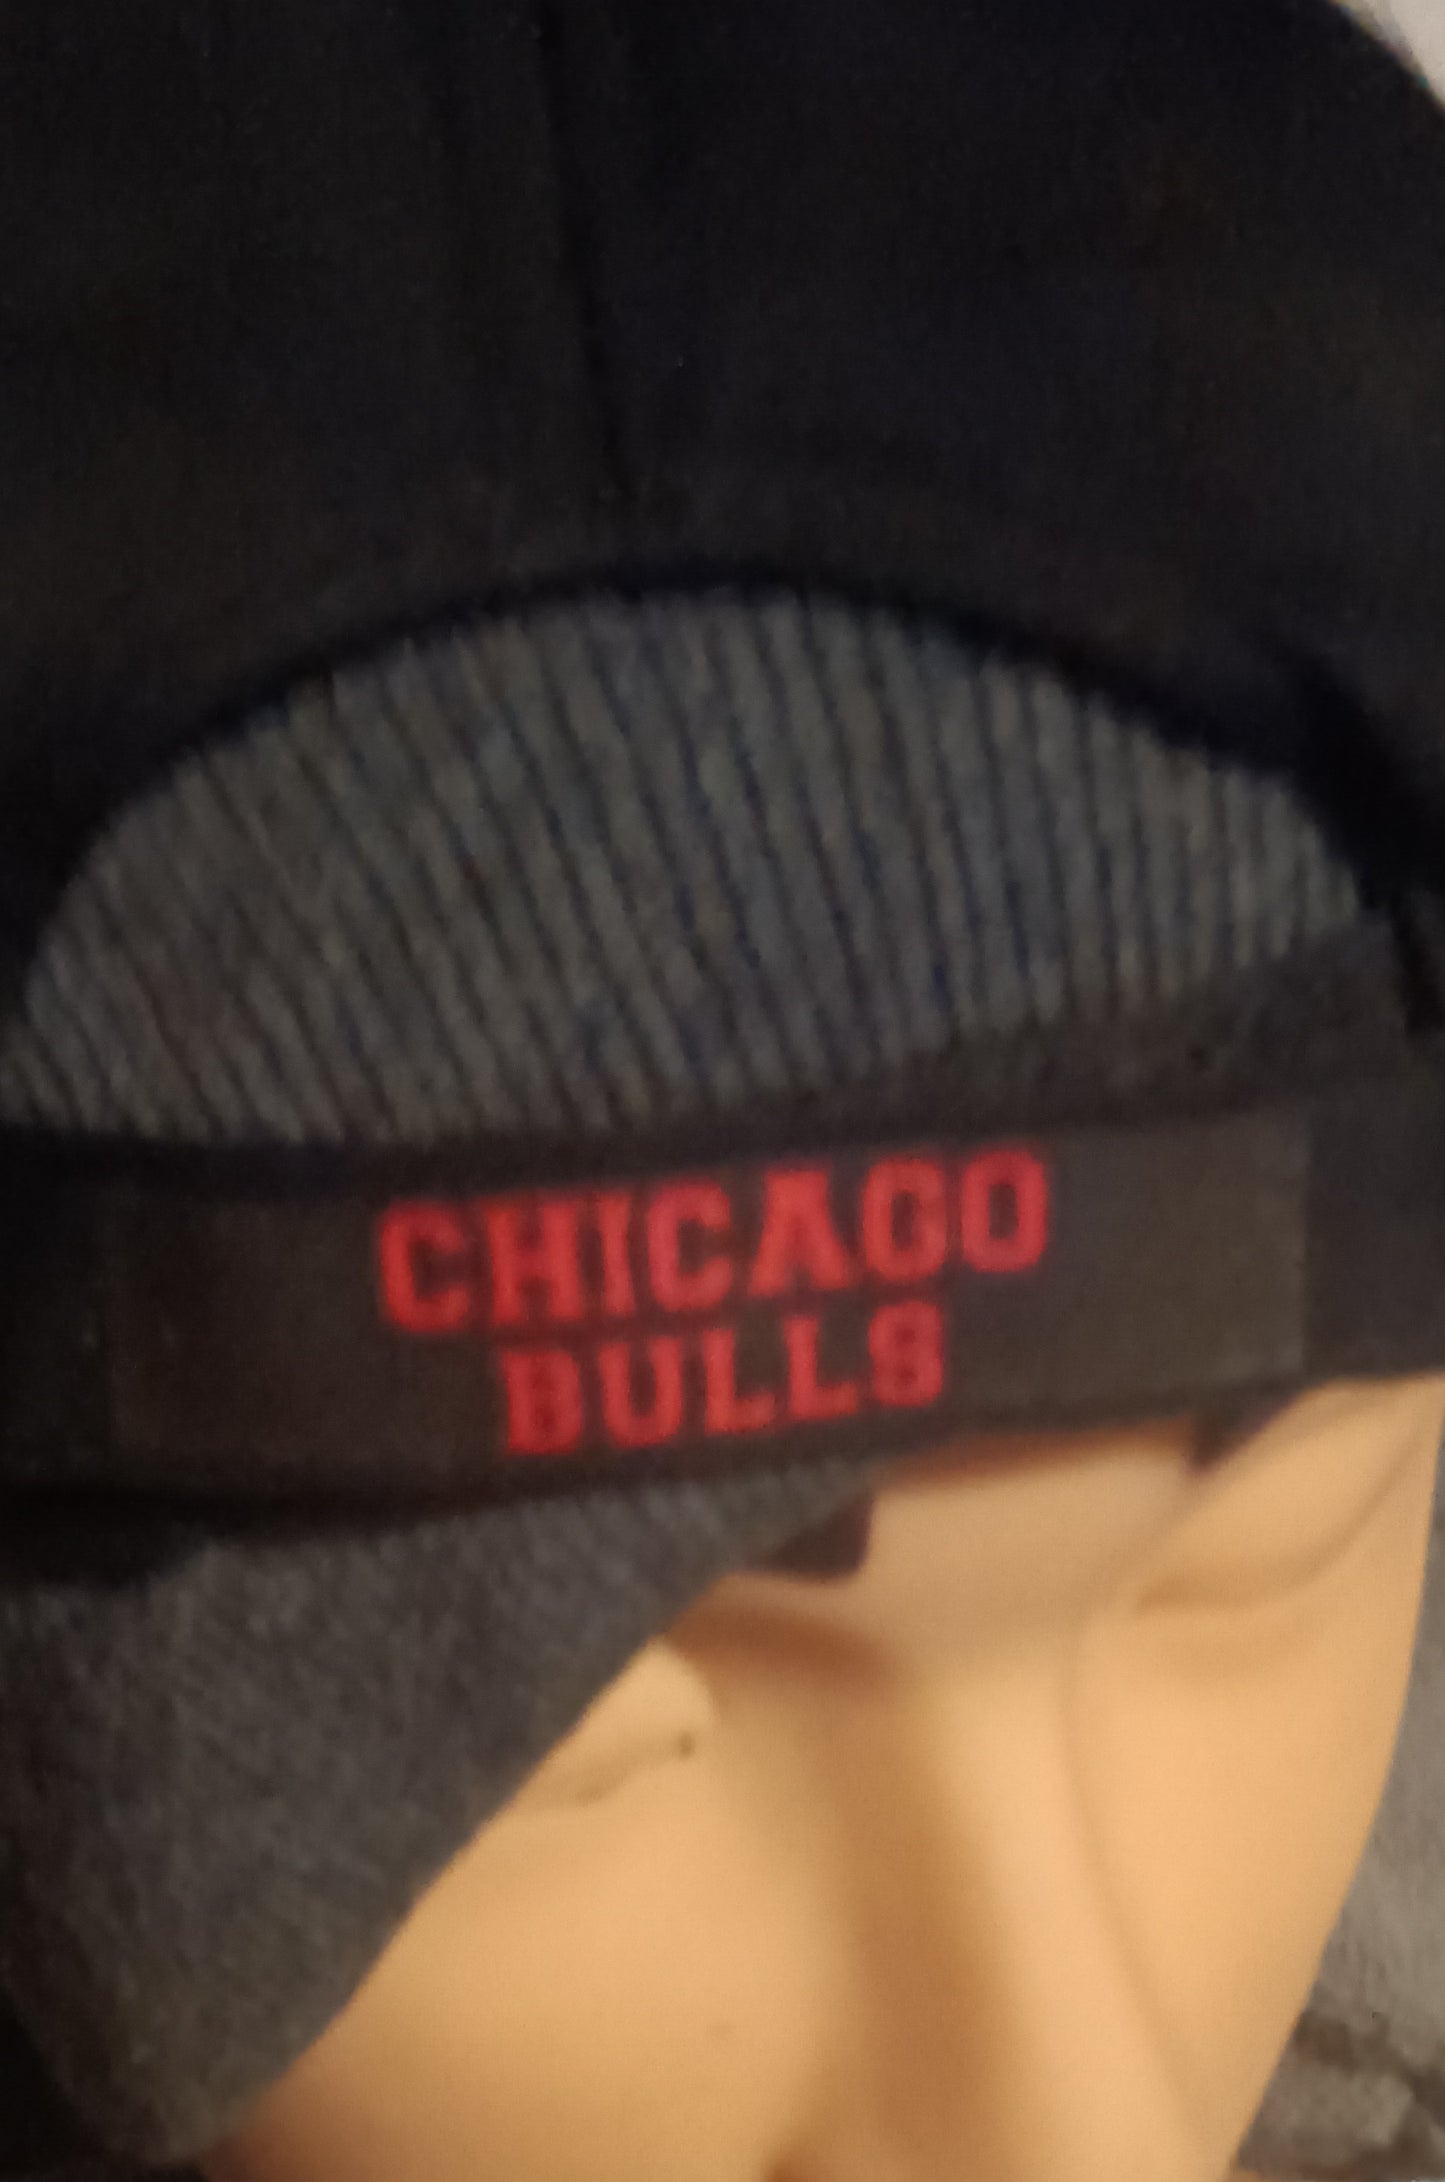 Chicago Bulls Unisex Adjustable Baseball Cap for Adults/ Teens